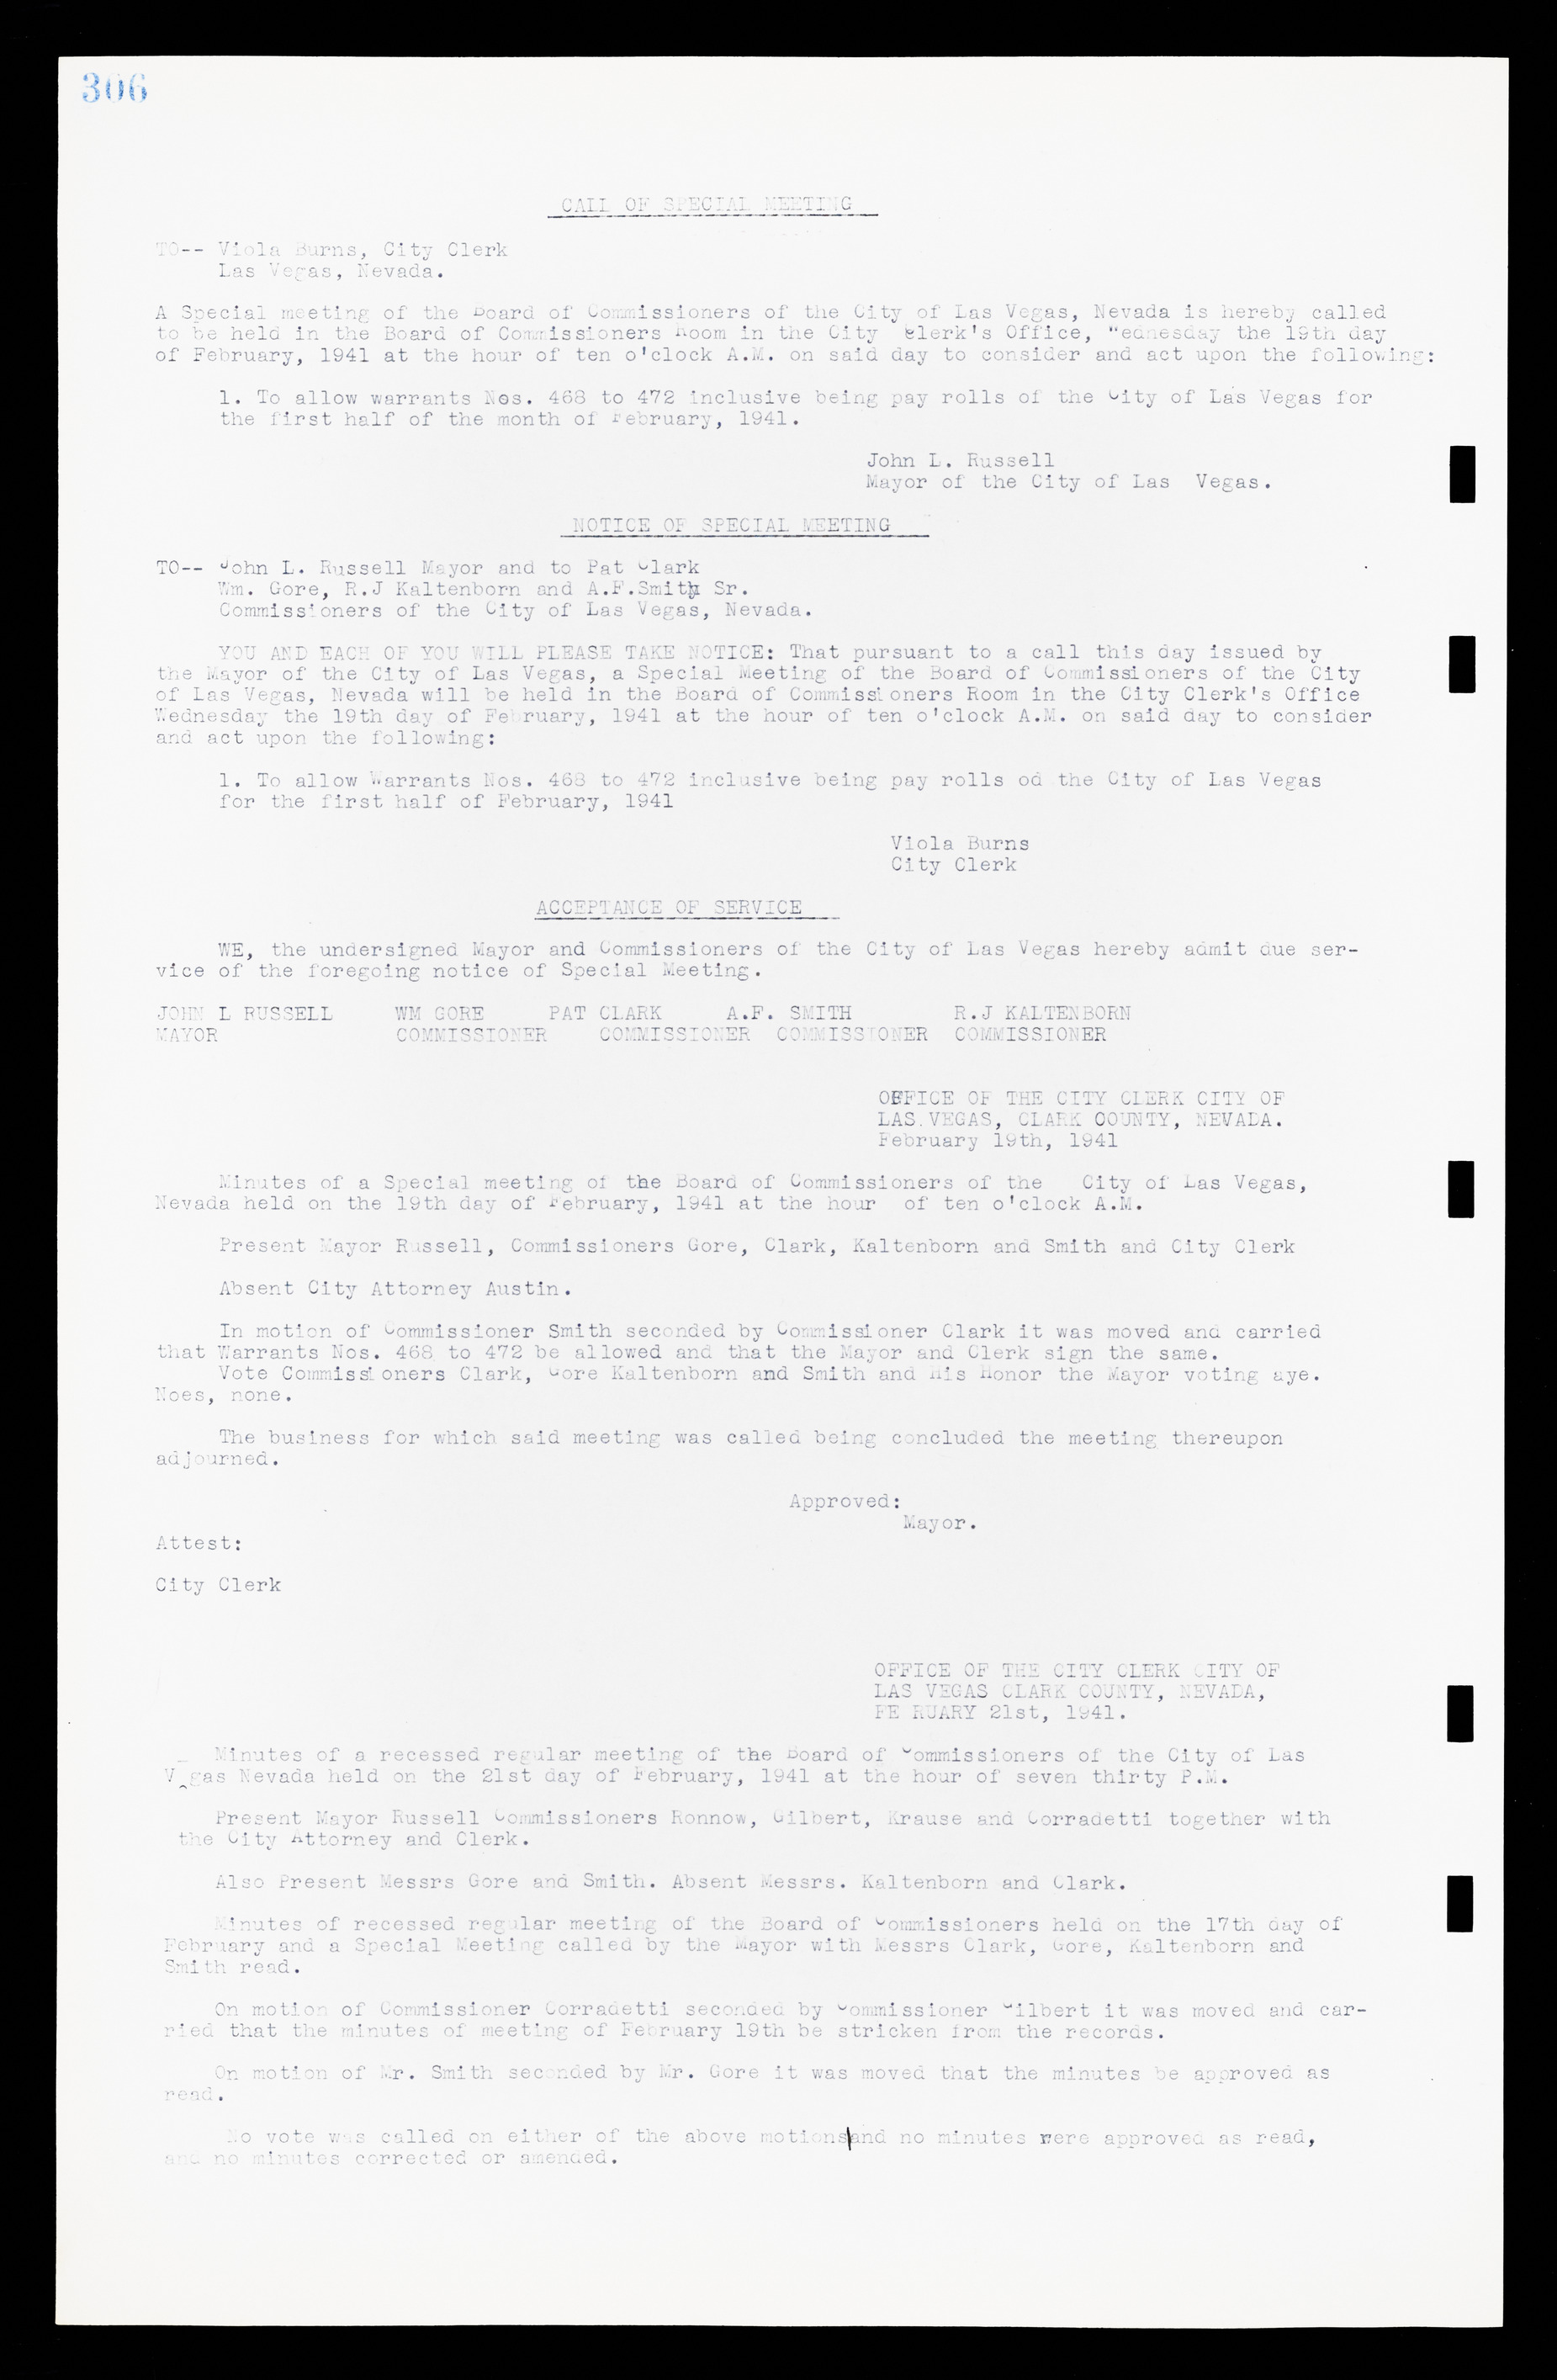 Las Vegas City Commission Minutes, February 17, 1937 to August 4, 1942, lvc000004-330